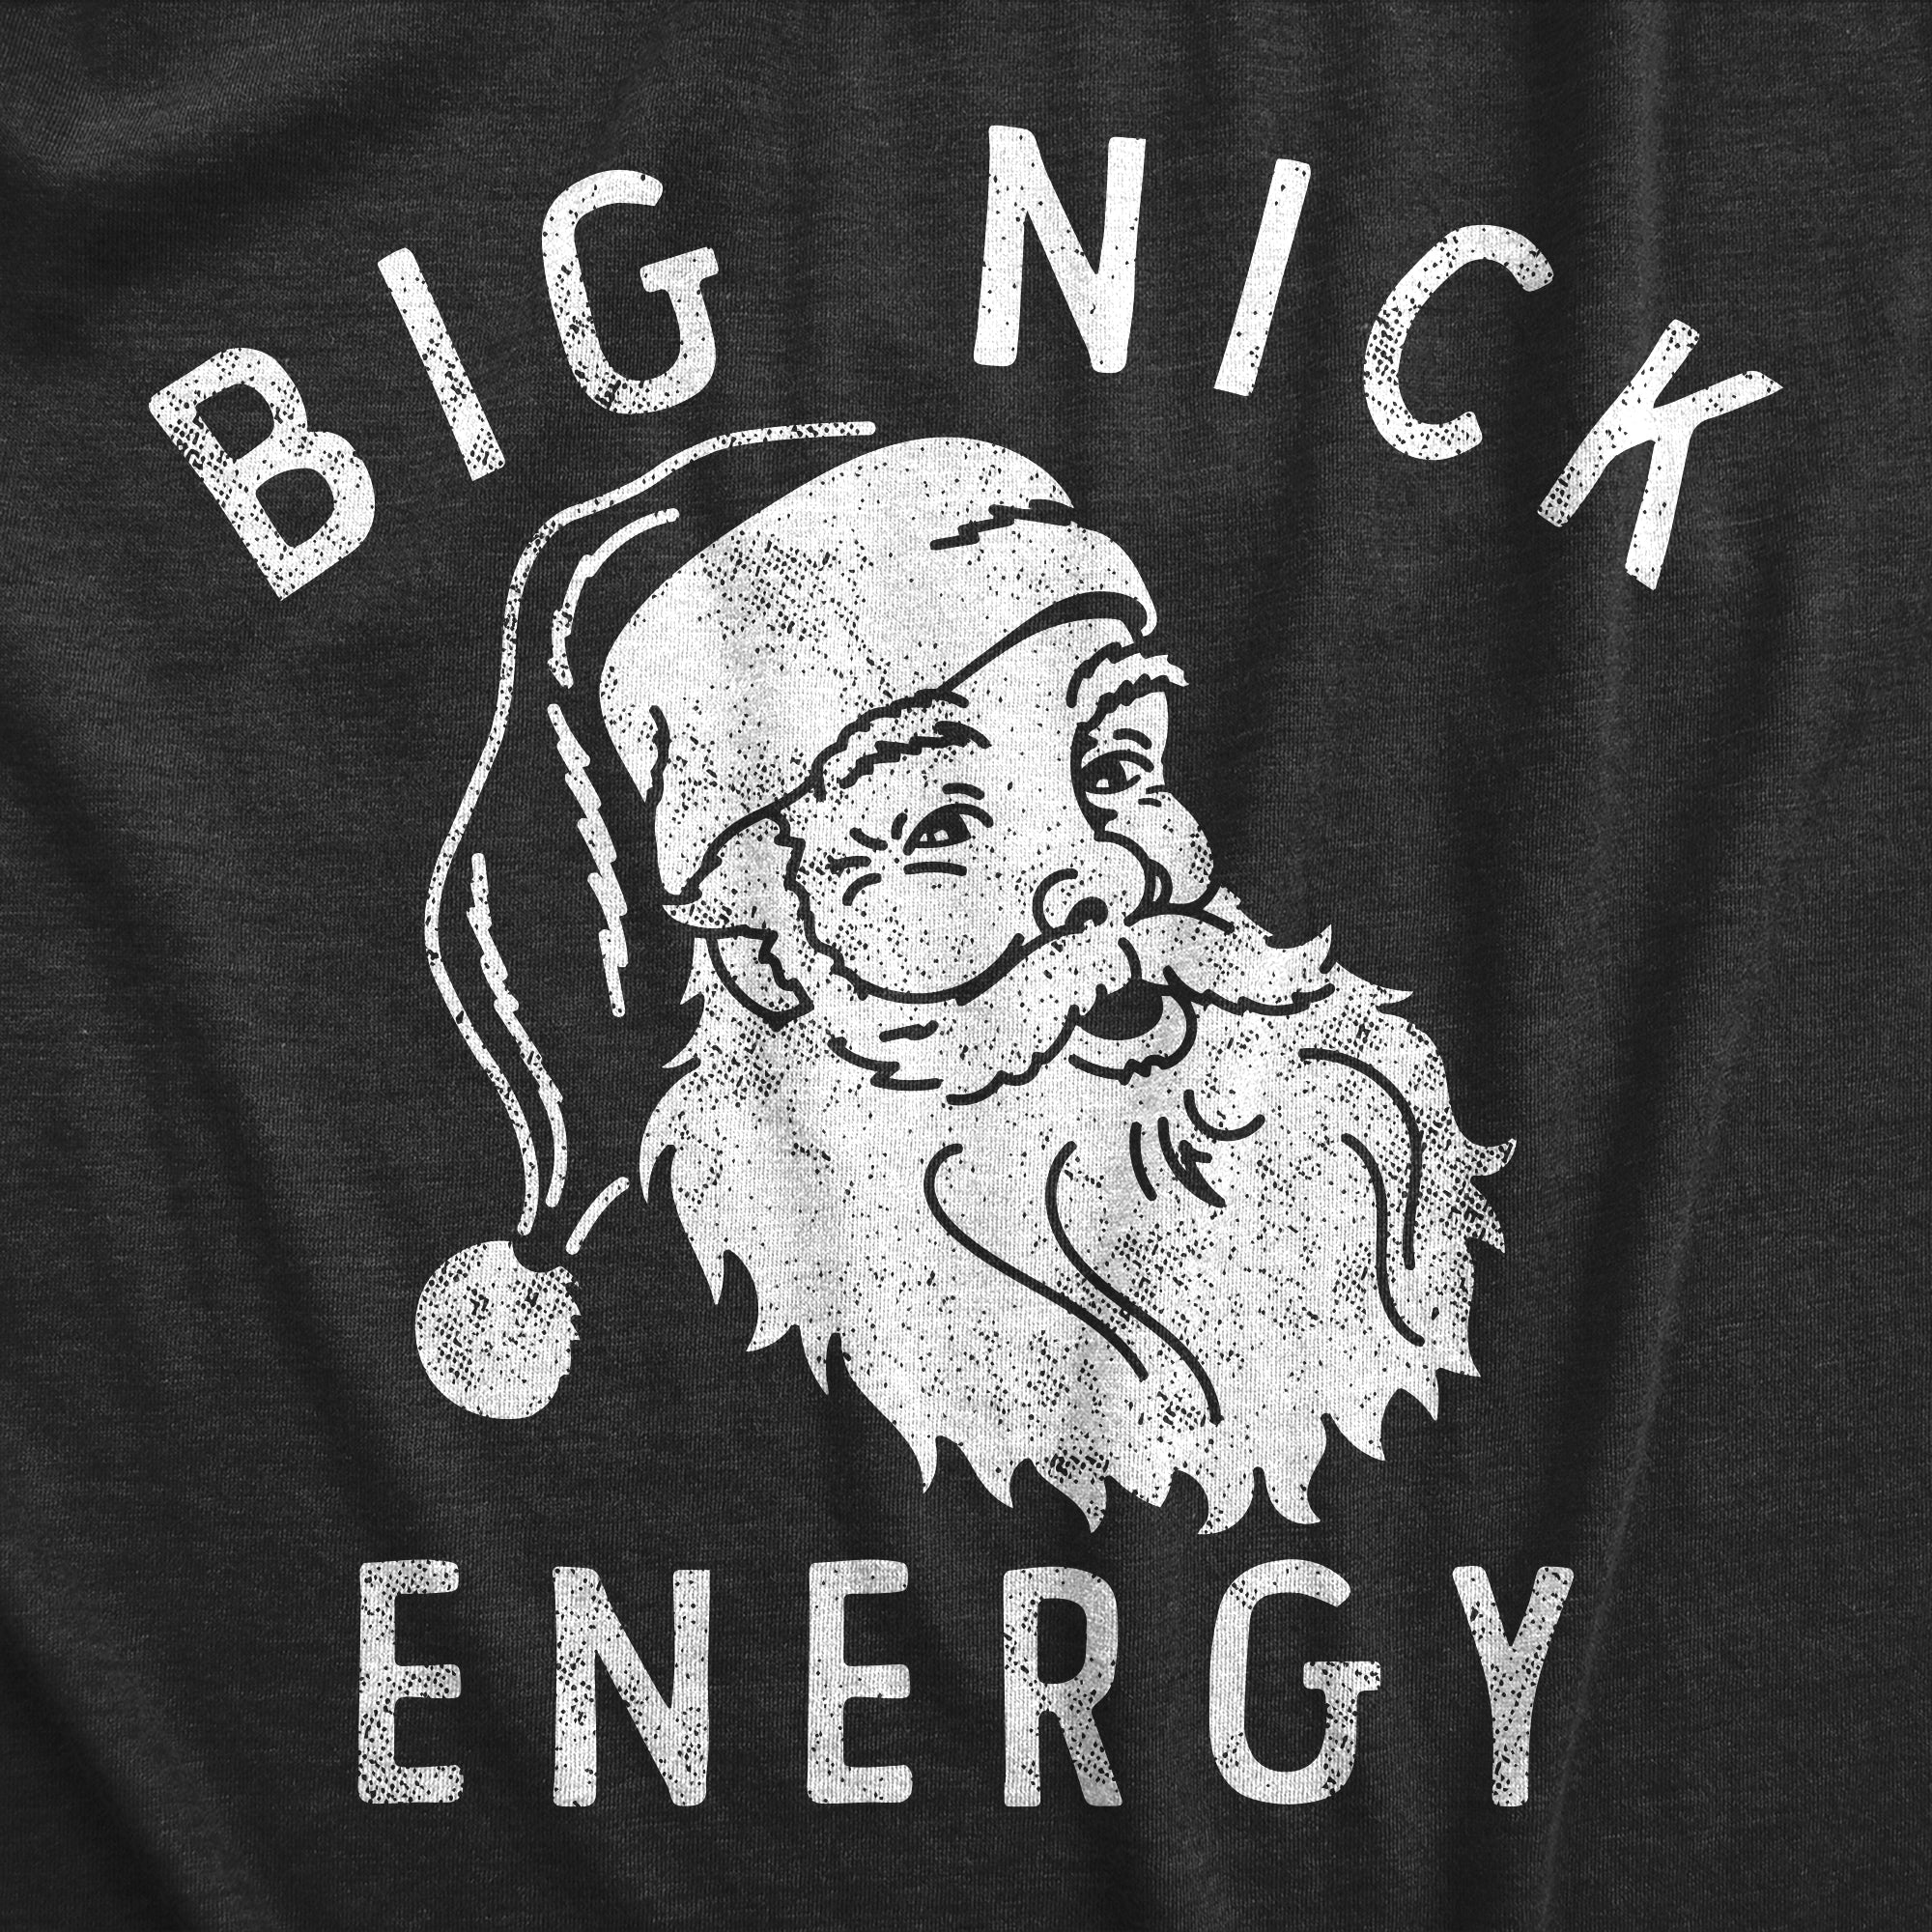 Funny Heather Black - NICK Big Nick Energy Womens T Shirt Nerdy Christmas Sarcastic Tee